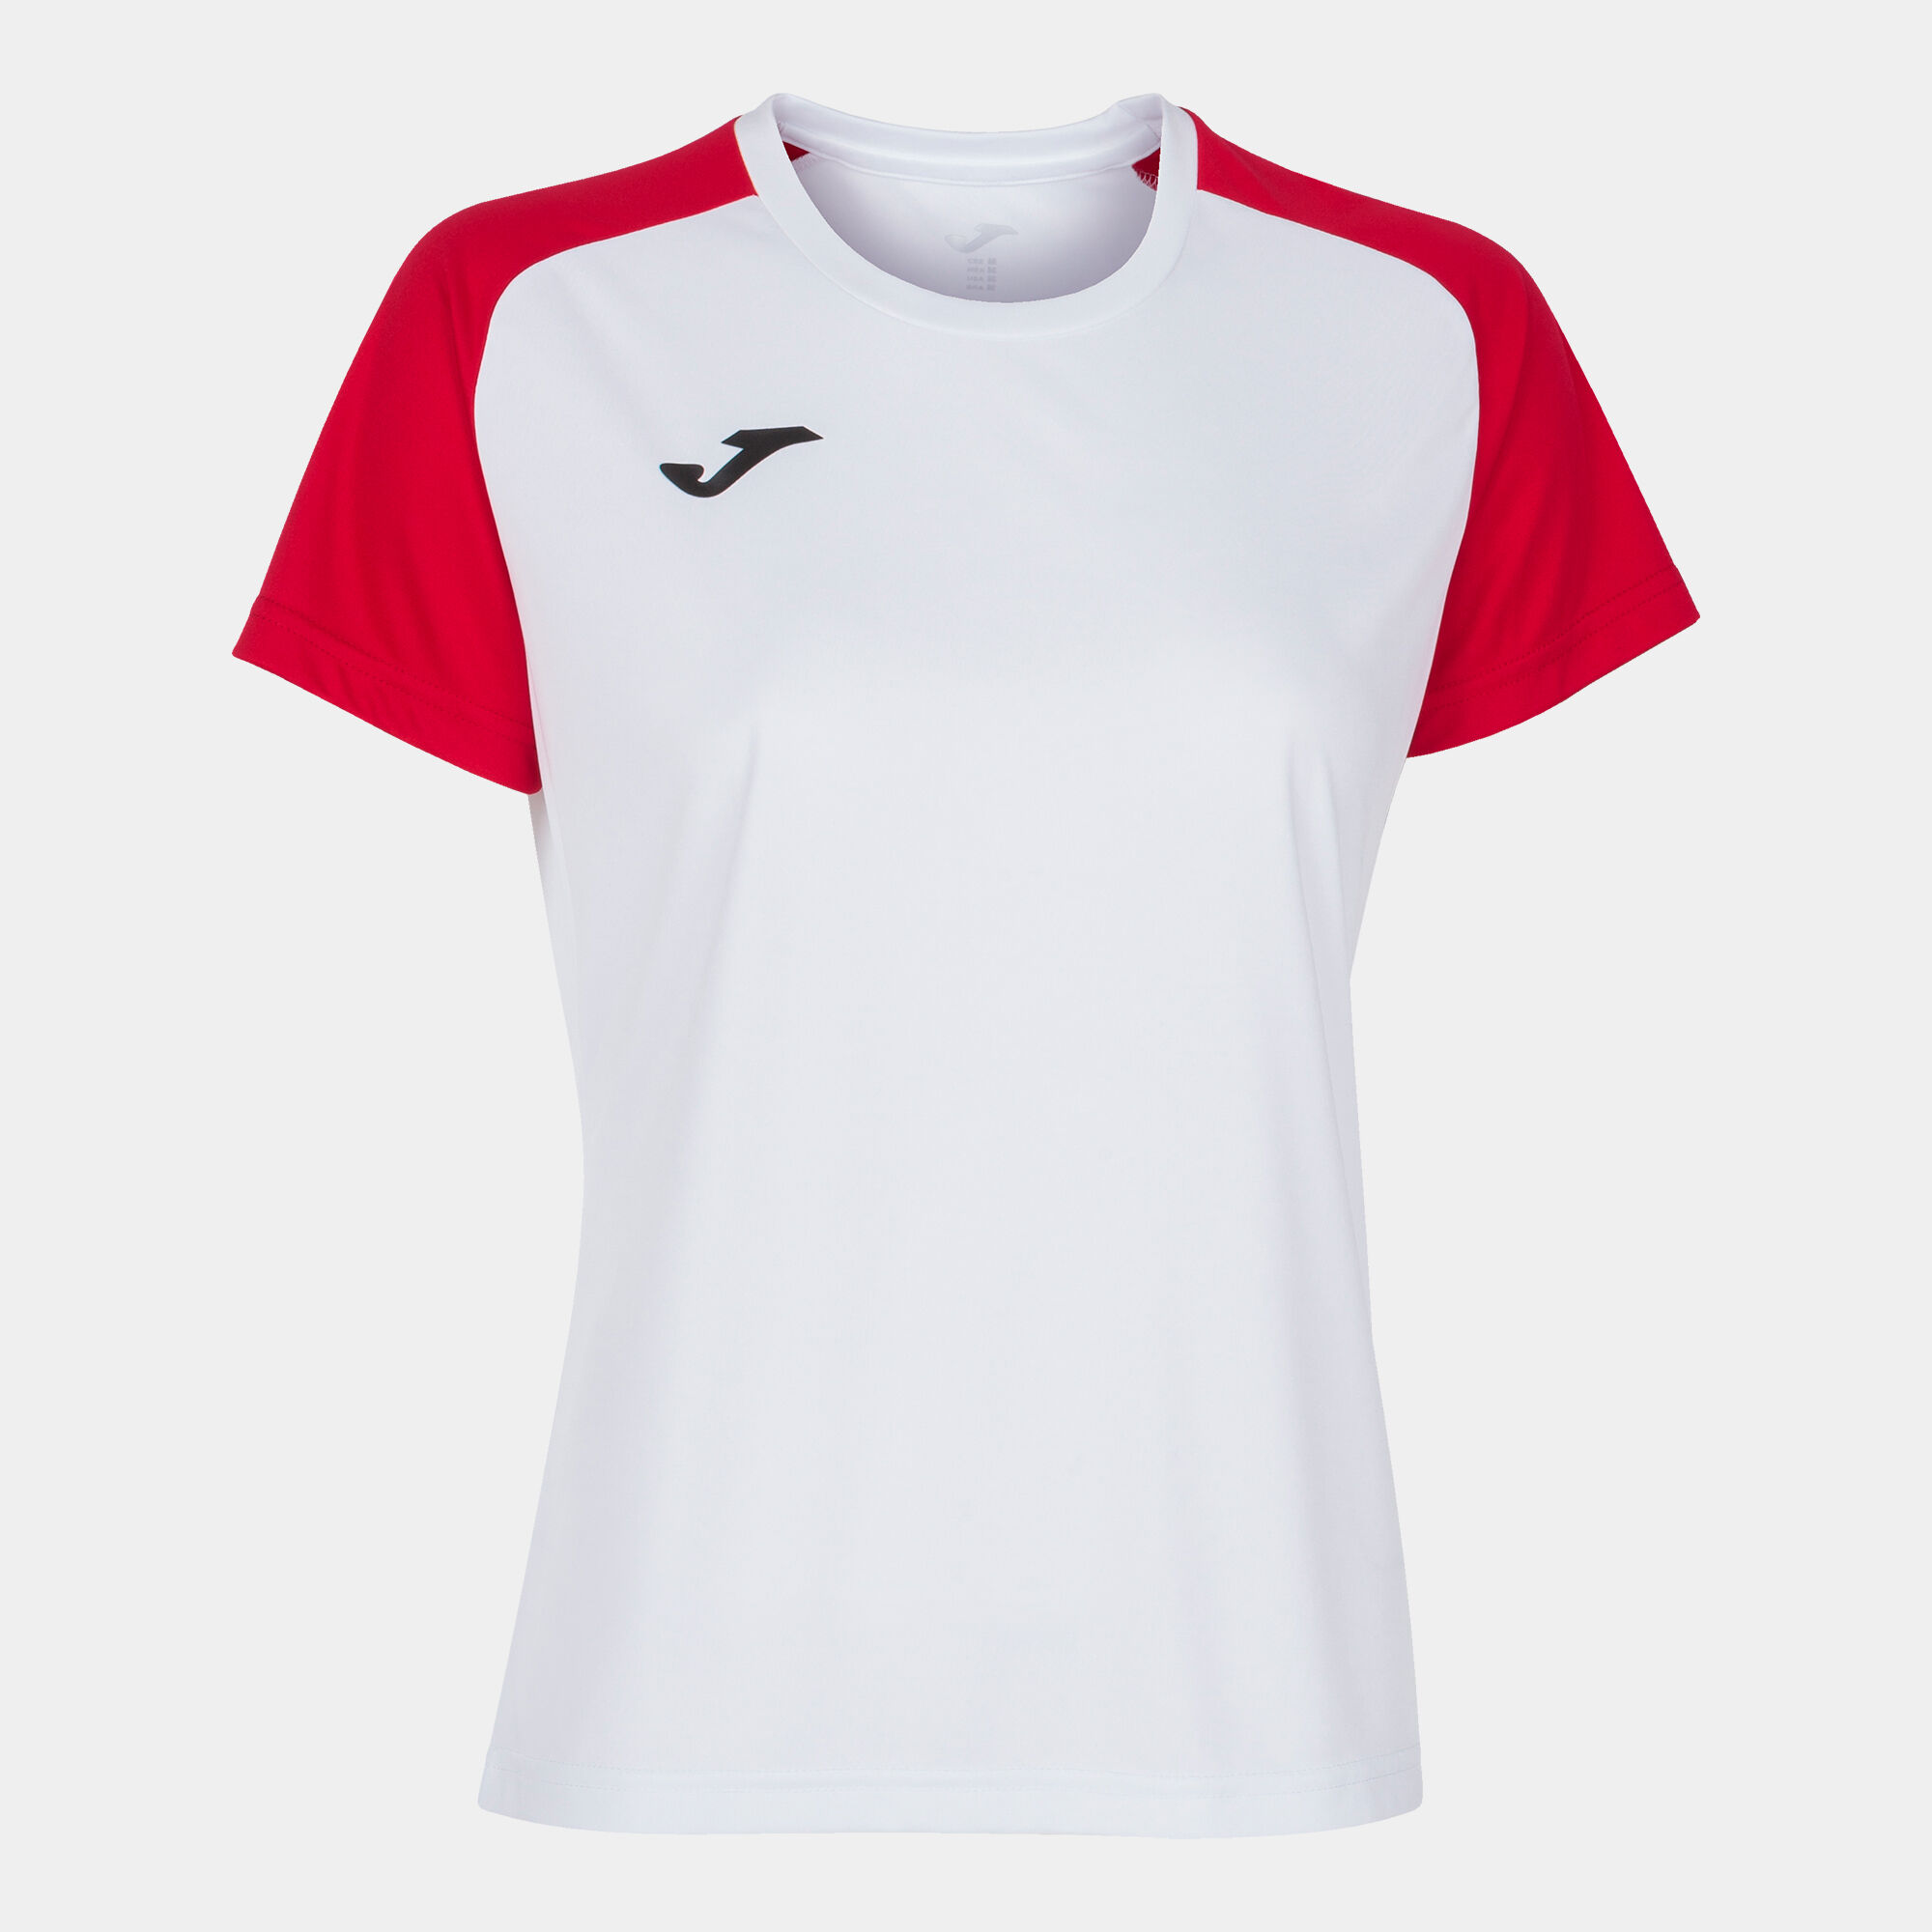 Camiseta manga corta mujer Academy IV blanco rojo